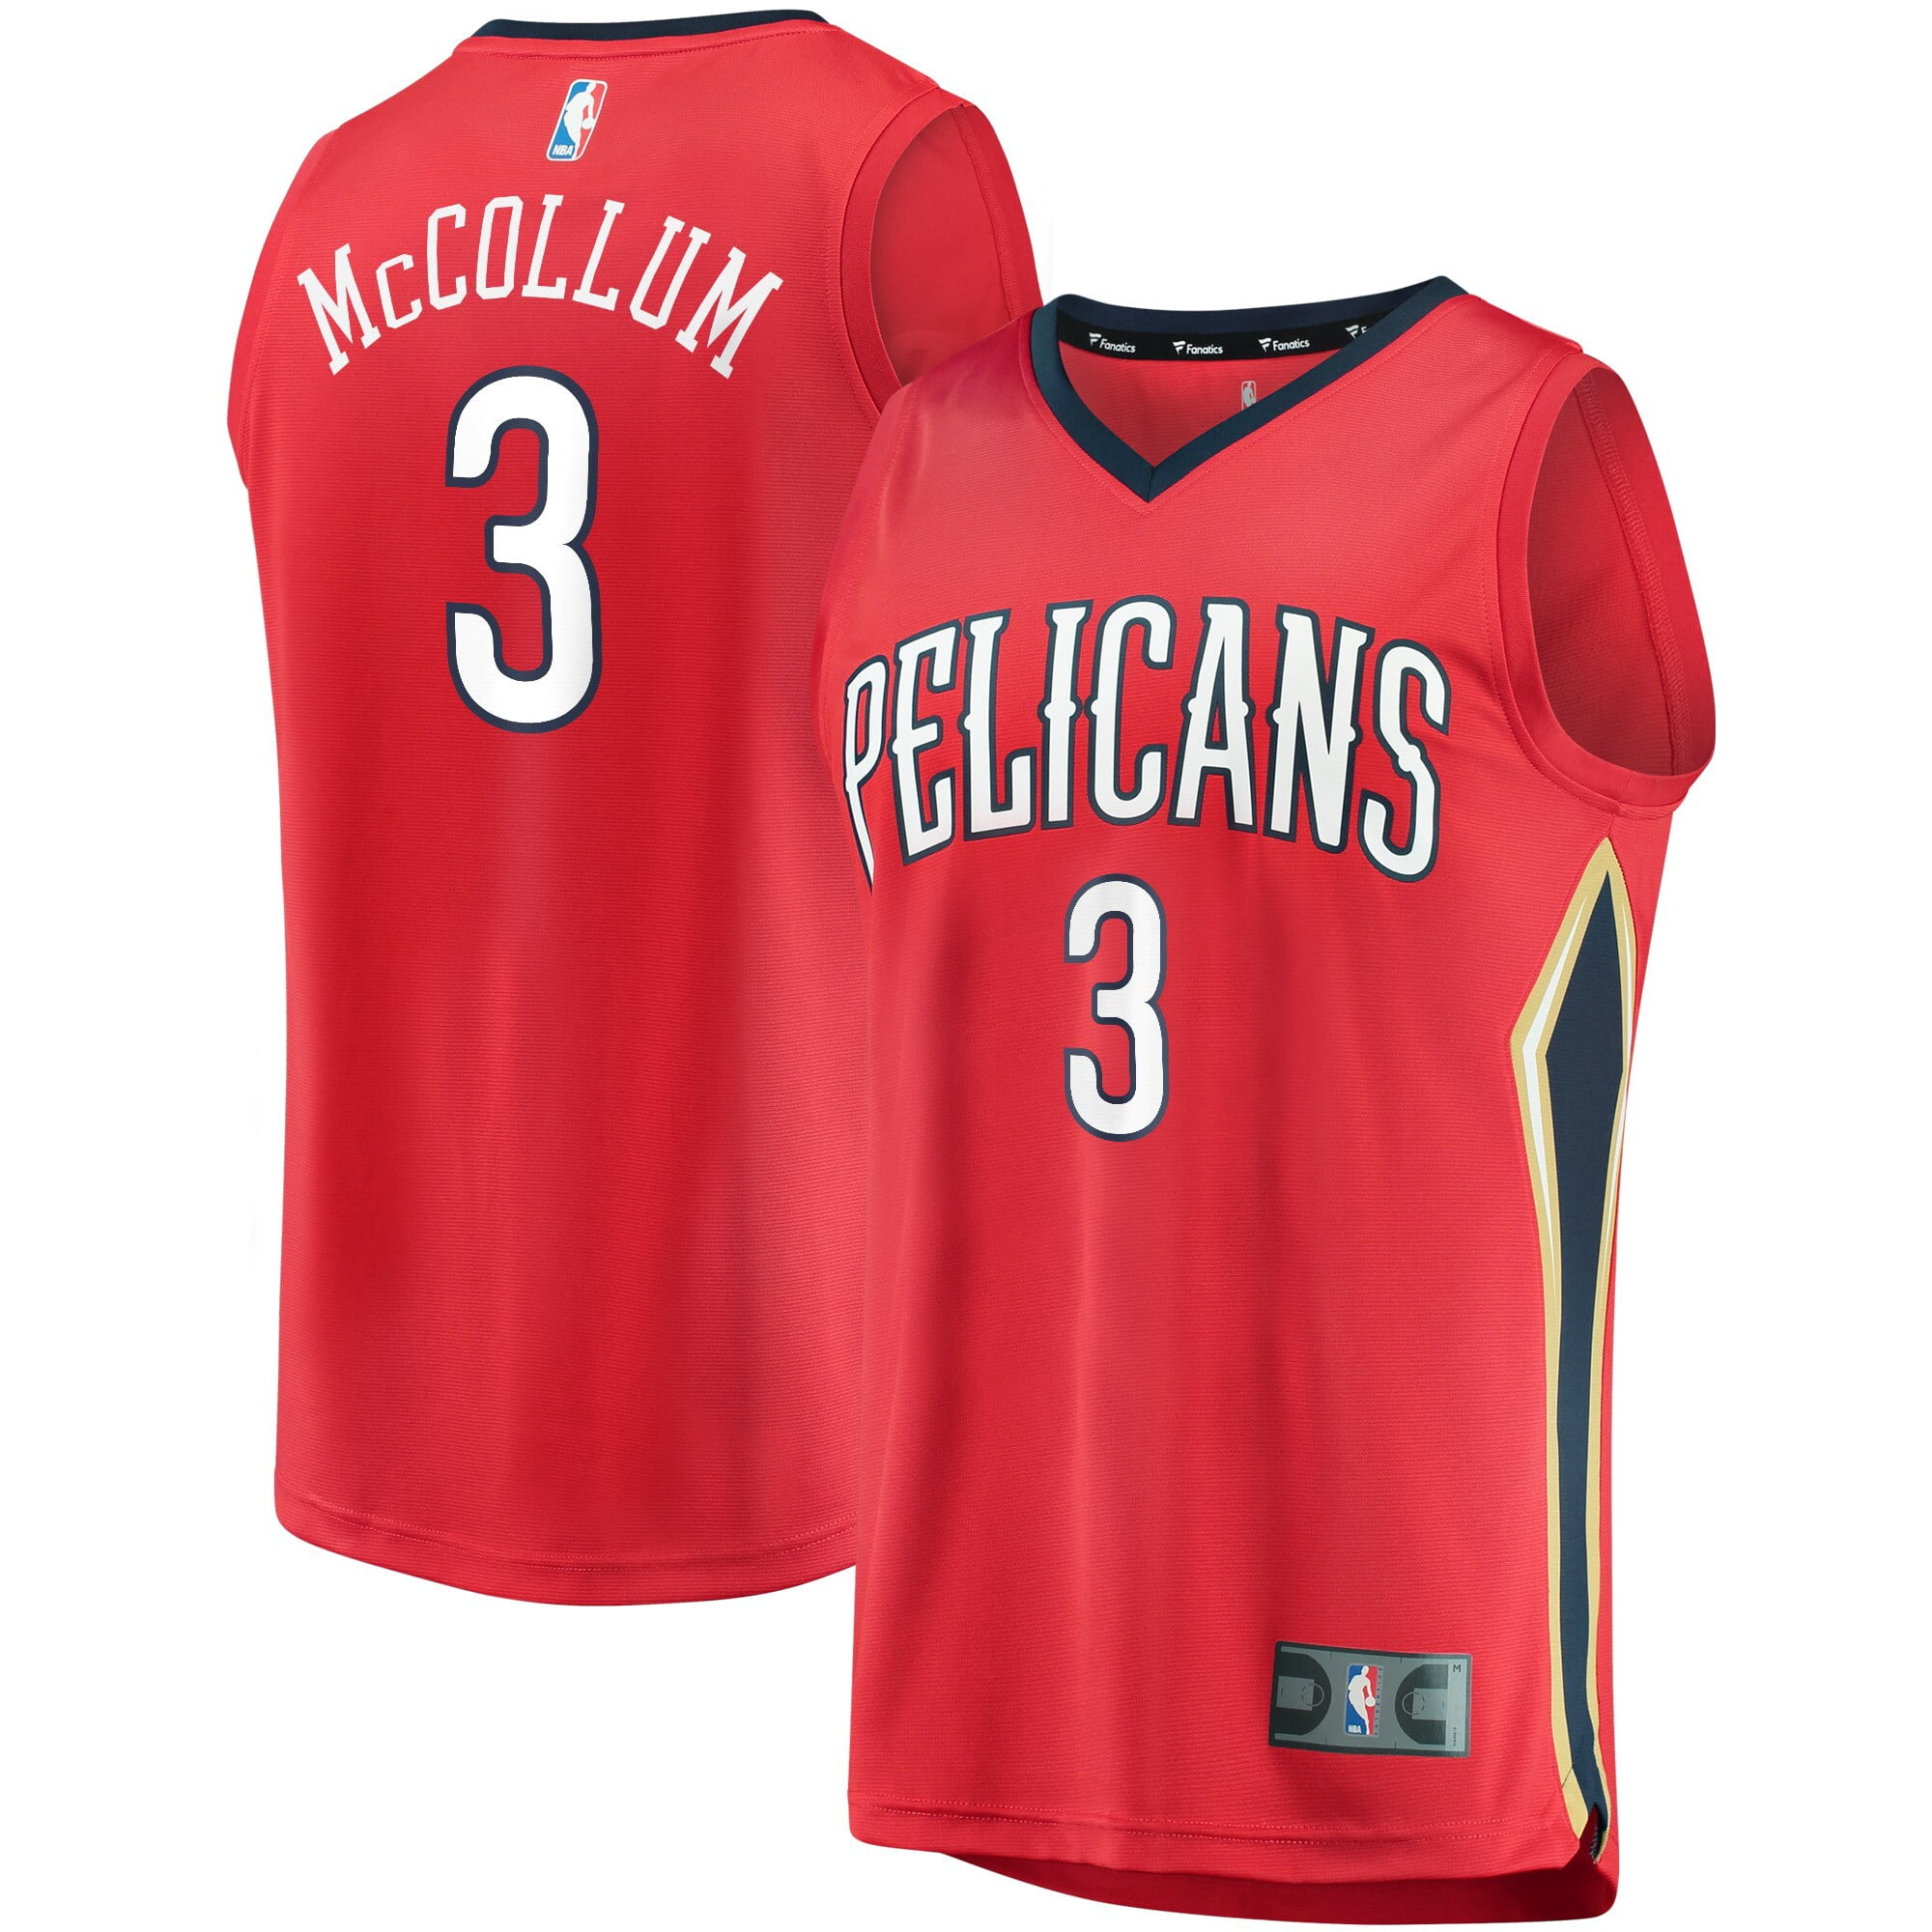 Brandon Ingram New Orleans Pelicans Autographed Navy Nike Swingman Jersey